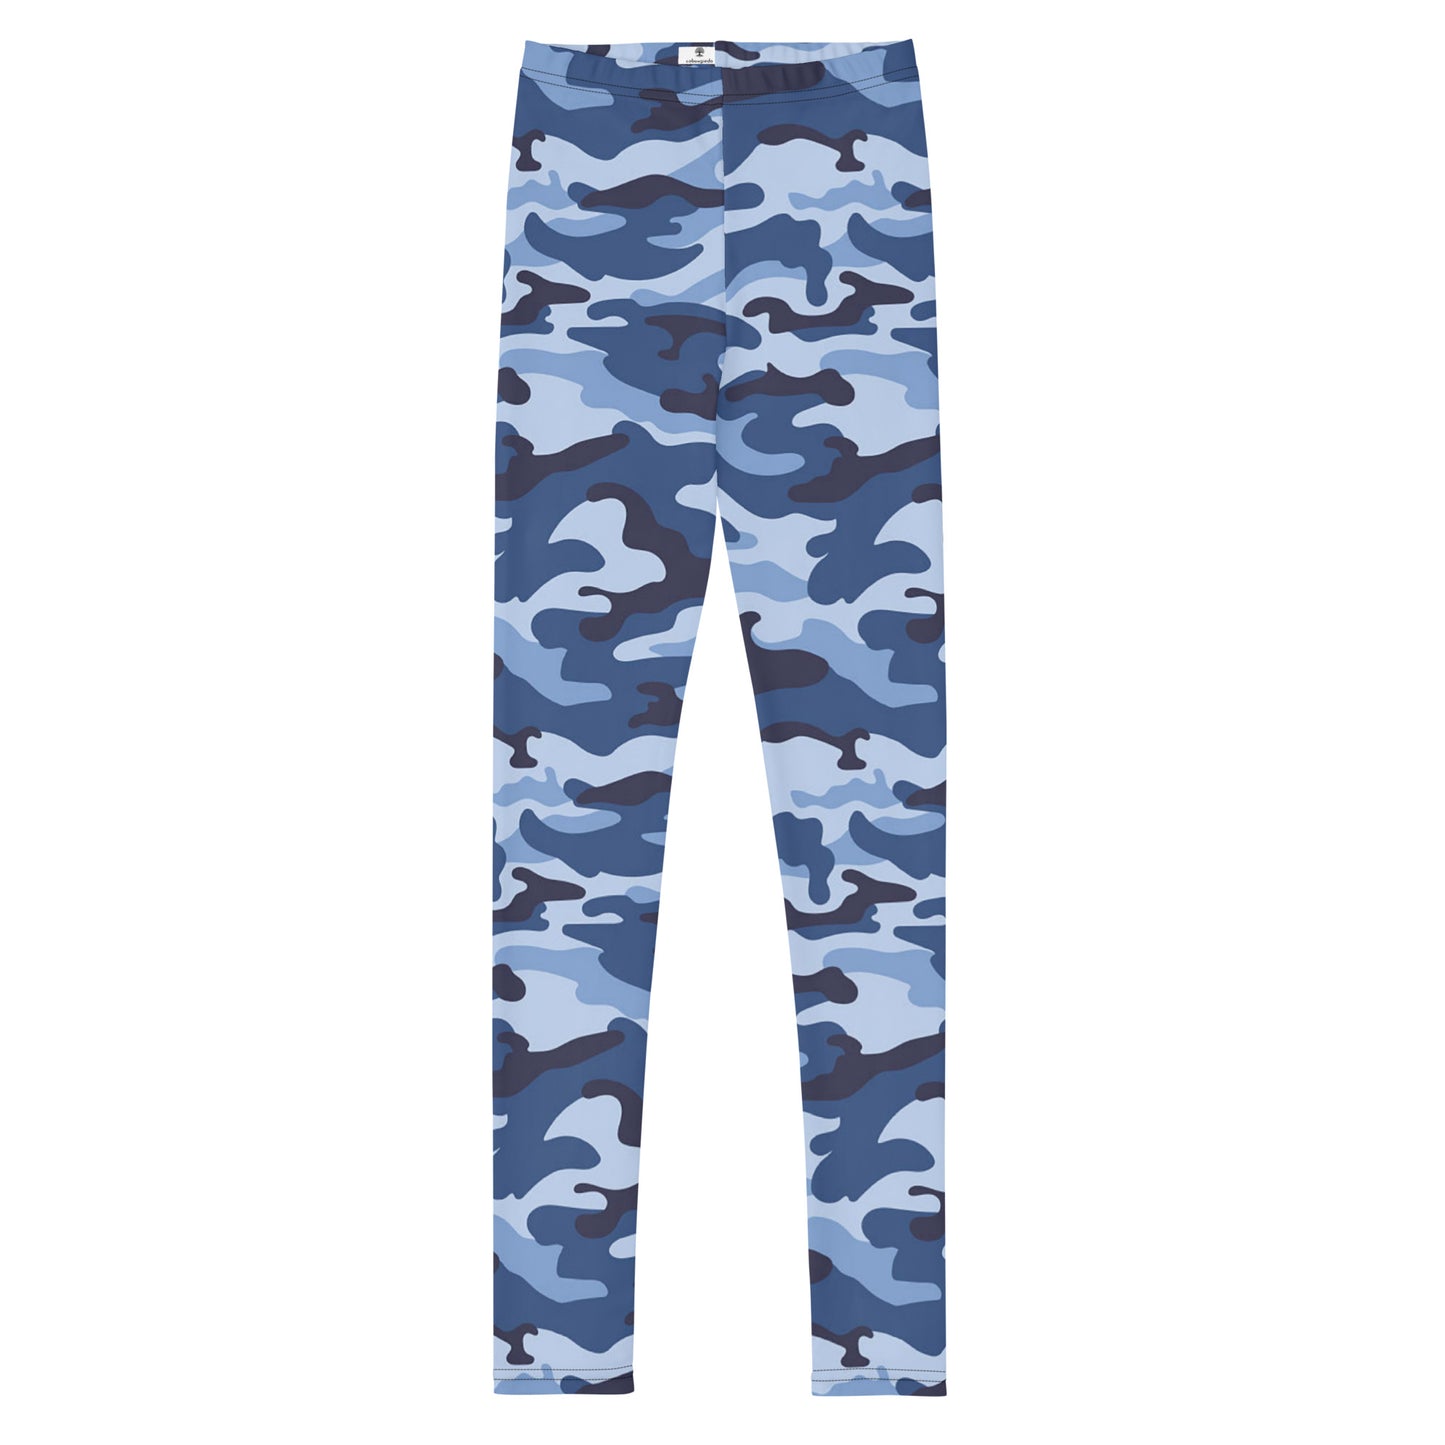 Youth Leggings - Blue & White Camouflage